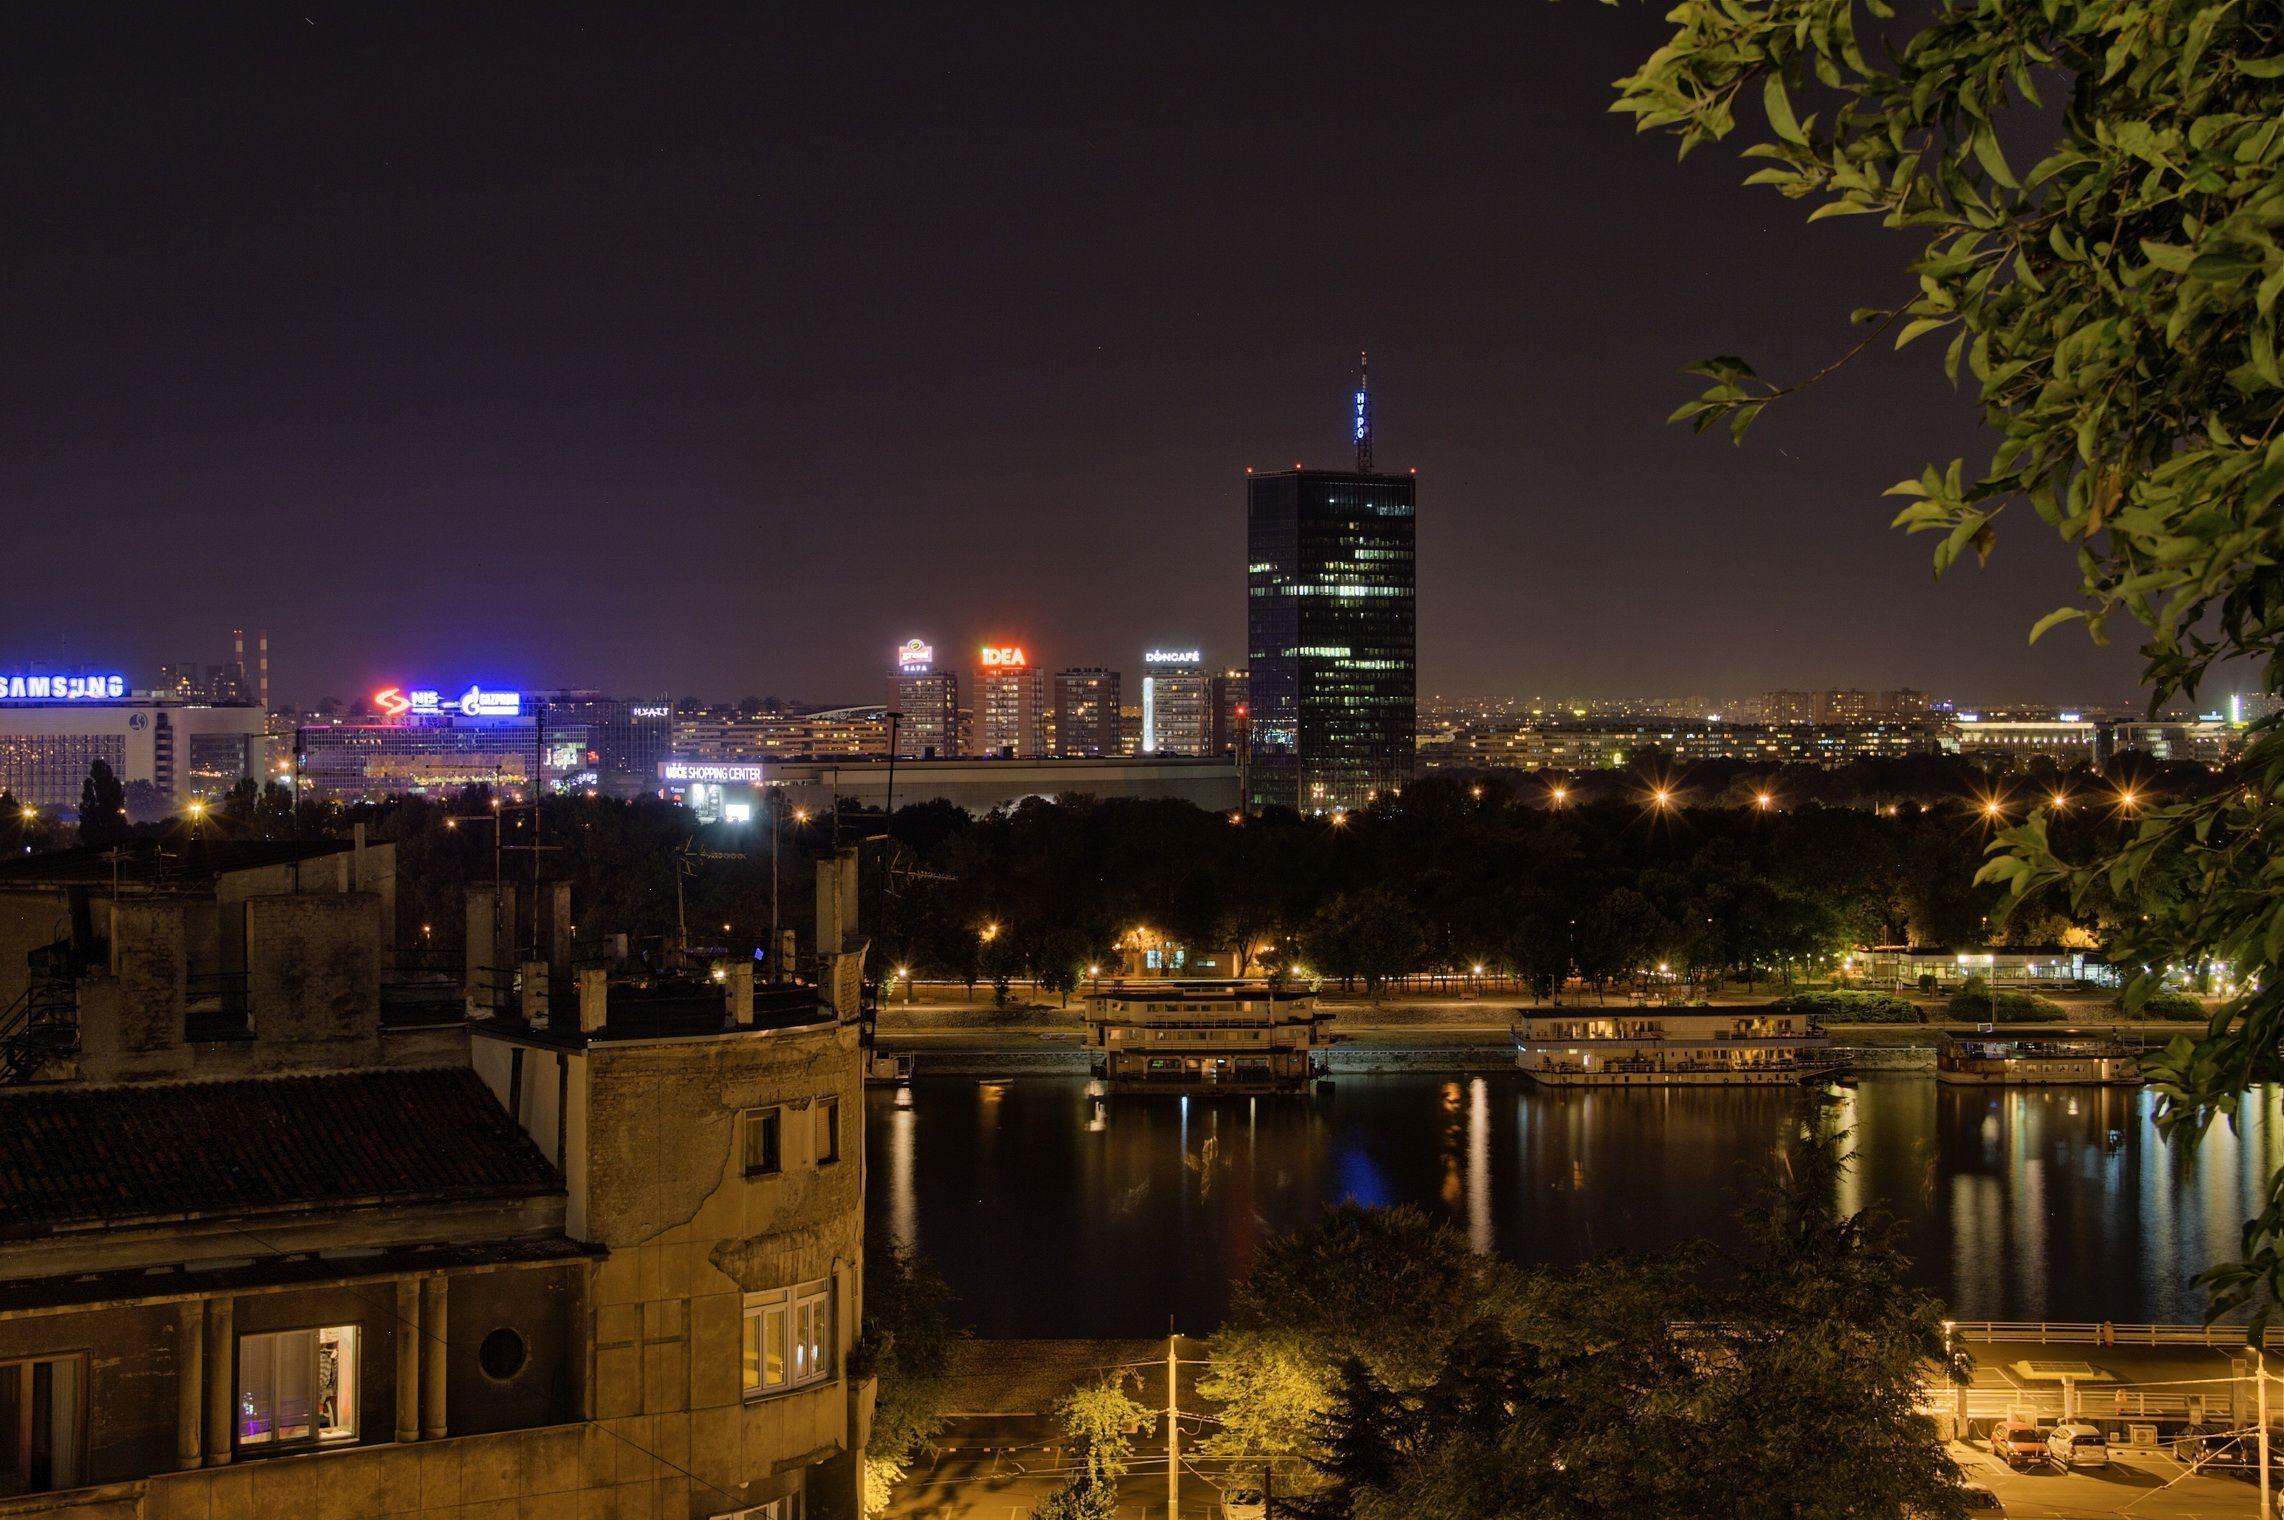 Photo Serbia Belgrade Canal night time Cities 2284x1520